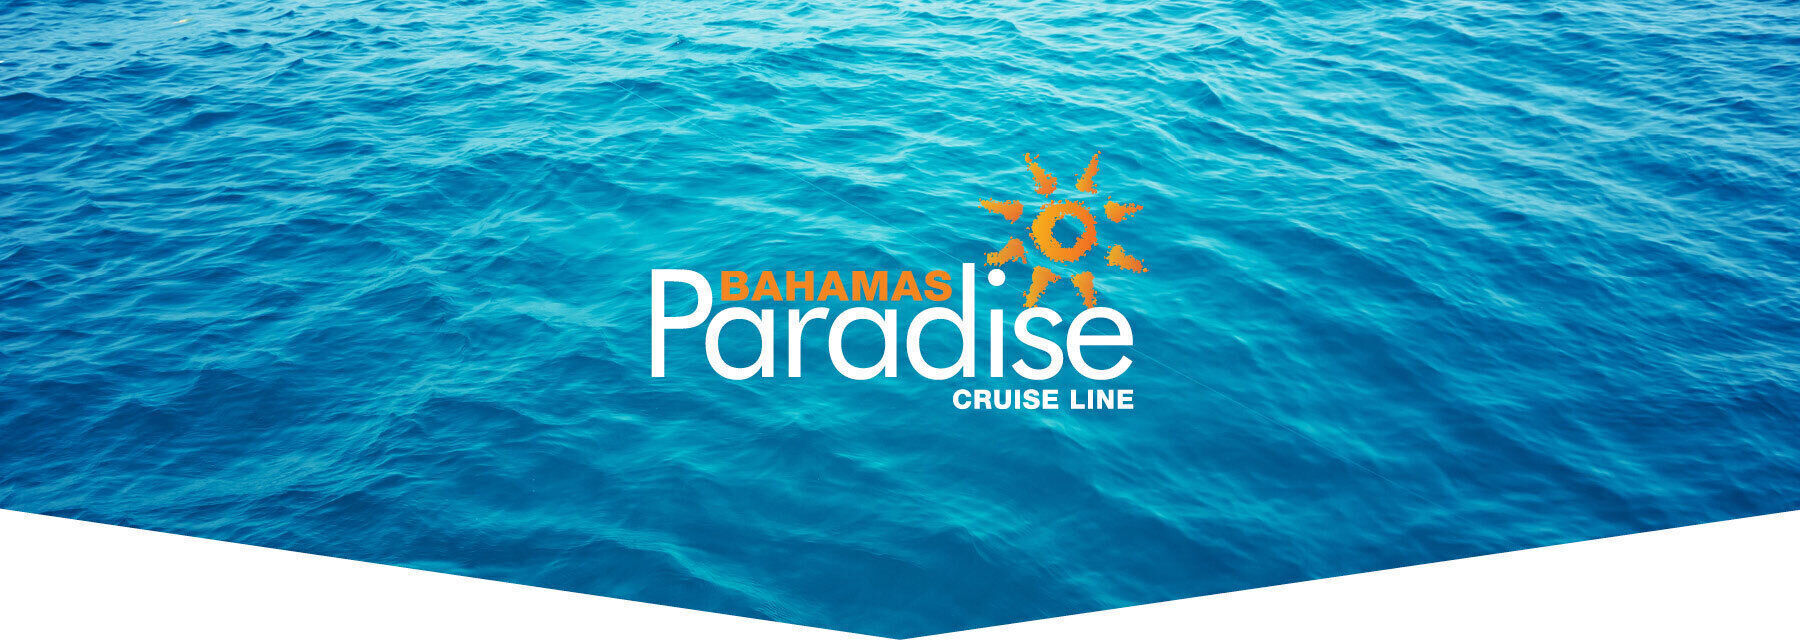 paradise cruise line header